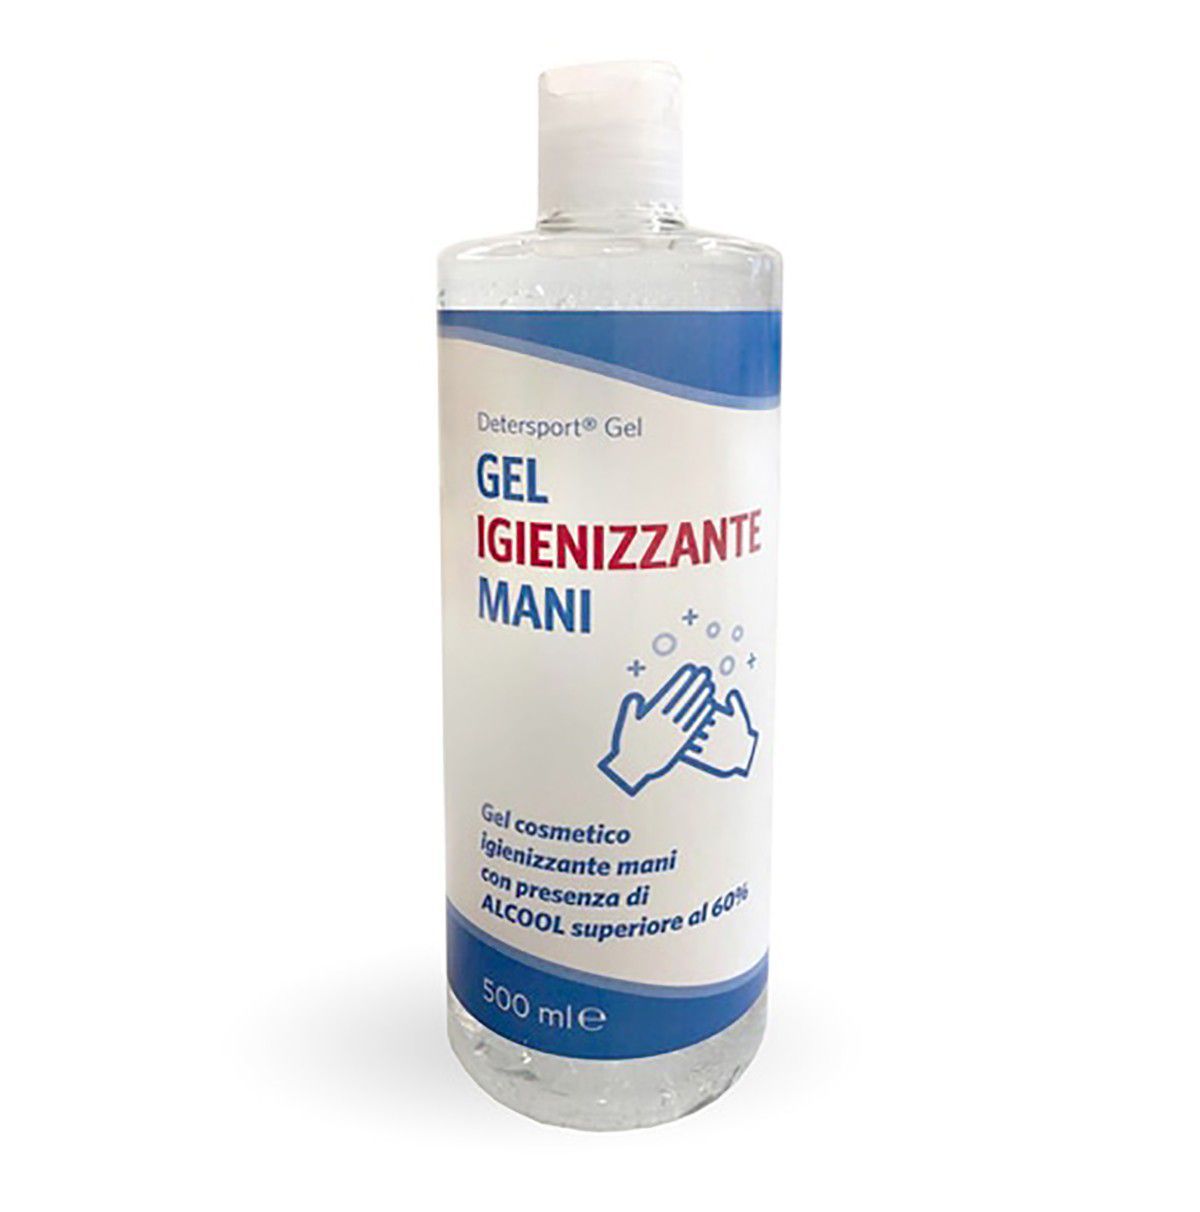 Detersport gel igienizzante mani - Sixtus Italia